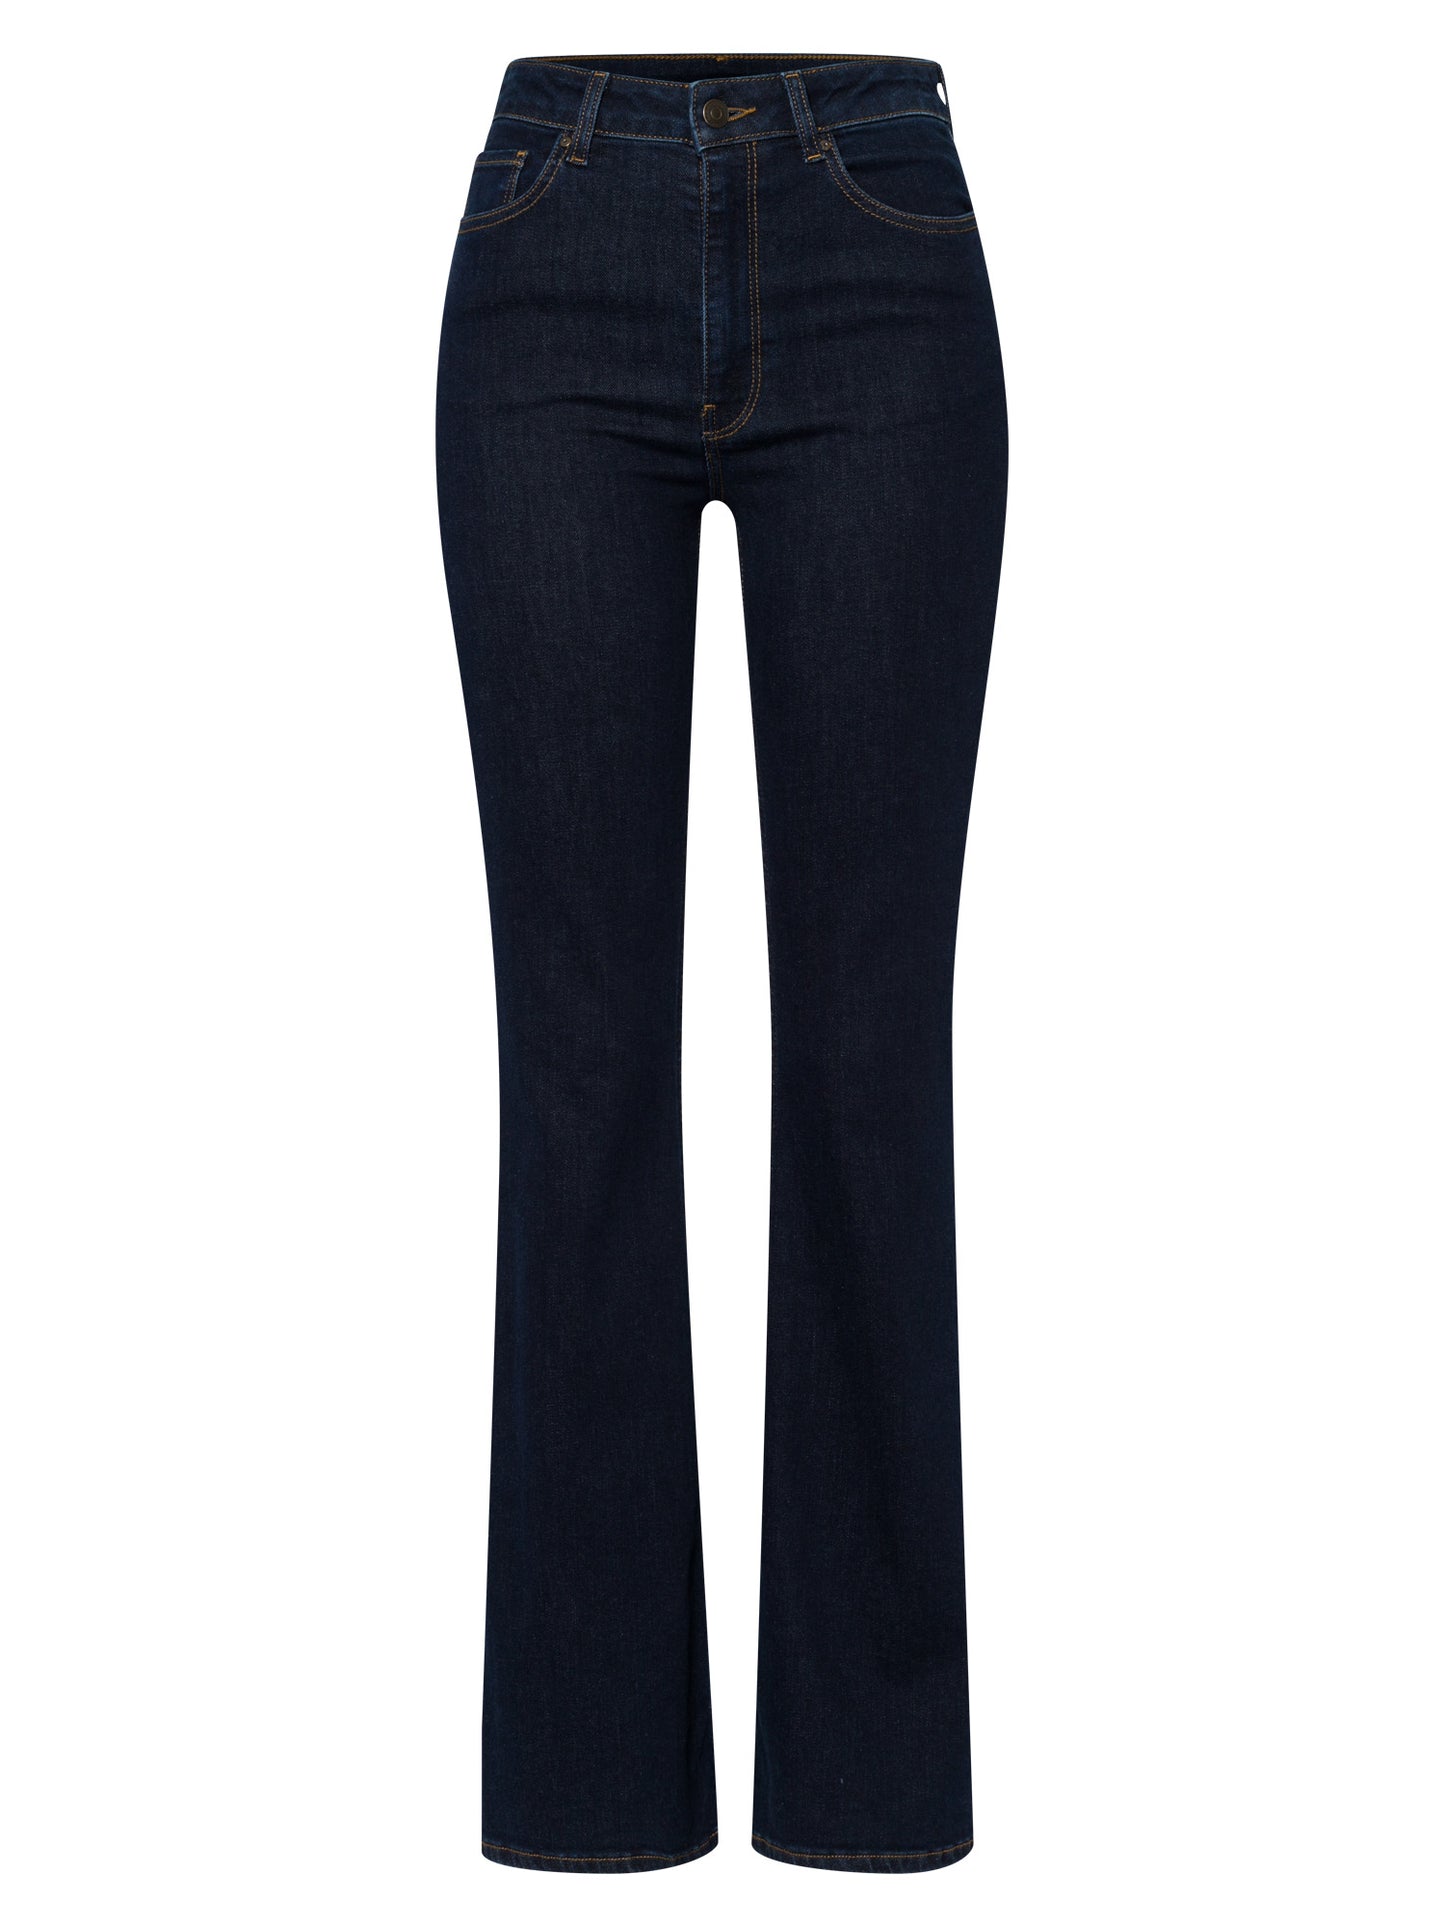 Women's jeans skinny fit high waist flare leg rinsed